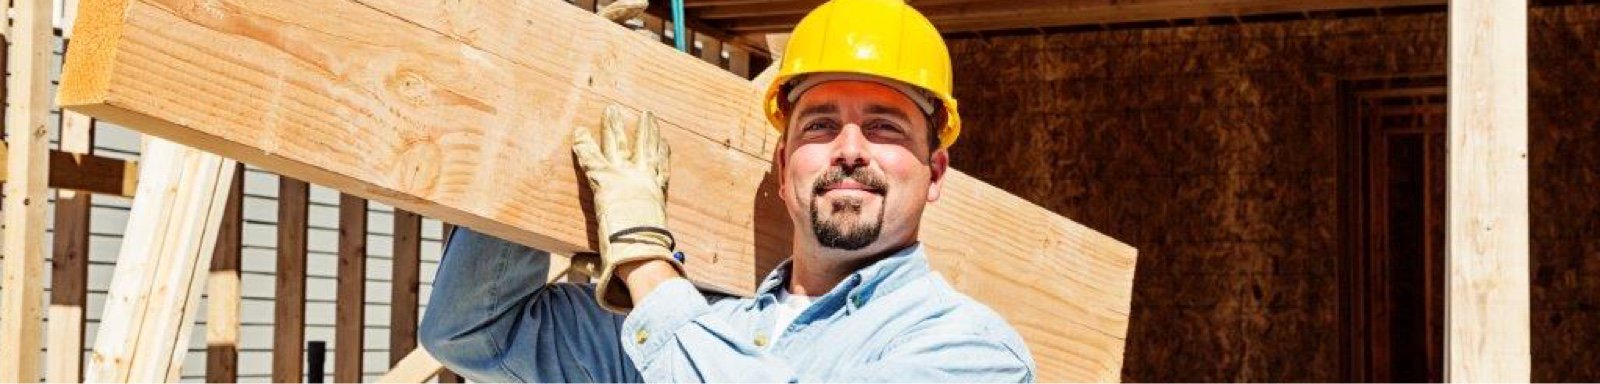 Smiling tradesman lifting building material